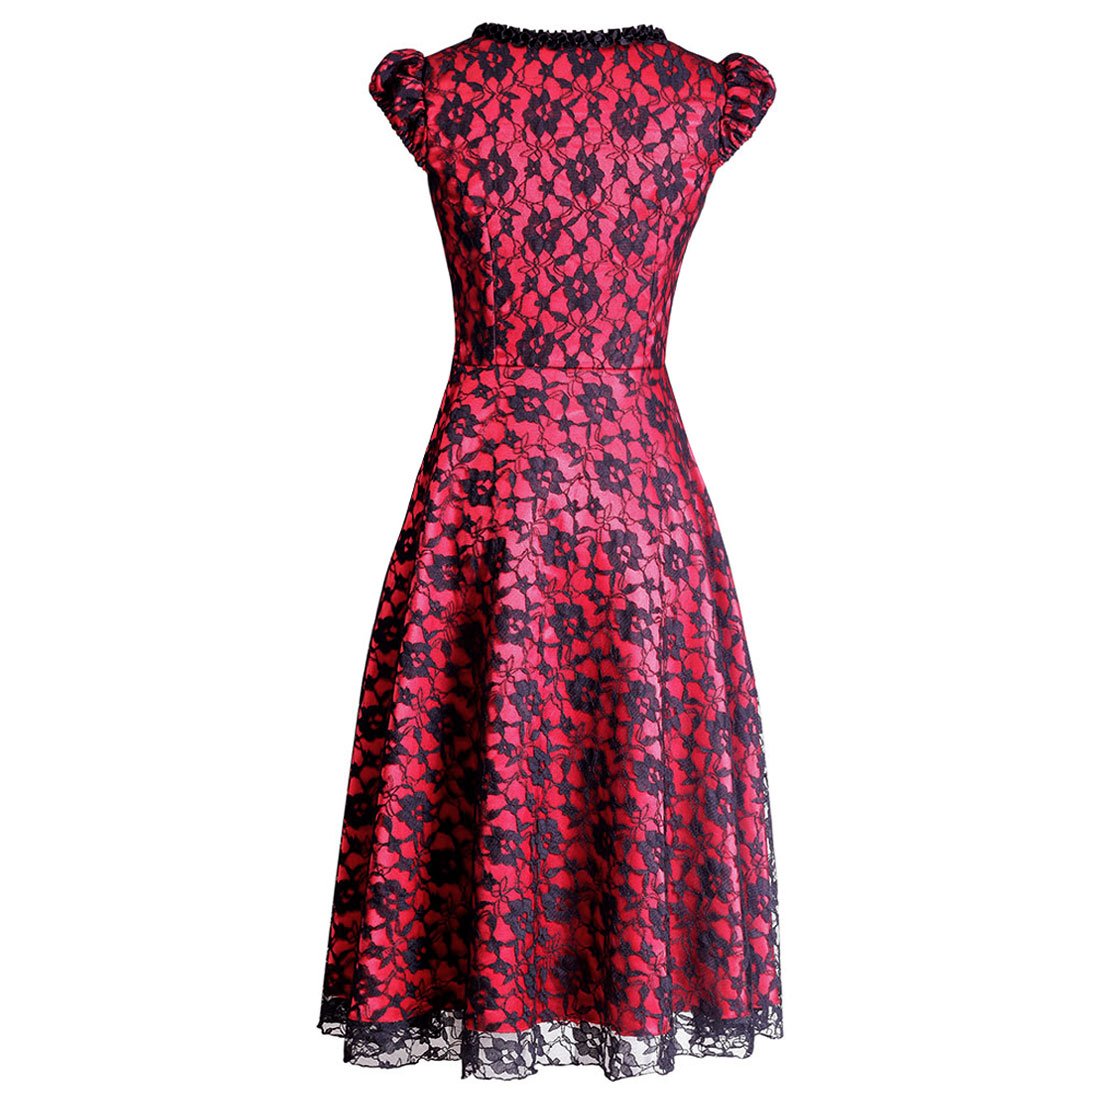 Balbina Gothic Burlesque Dress - Corset Revolution